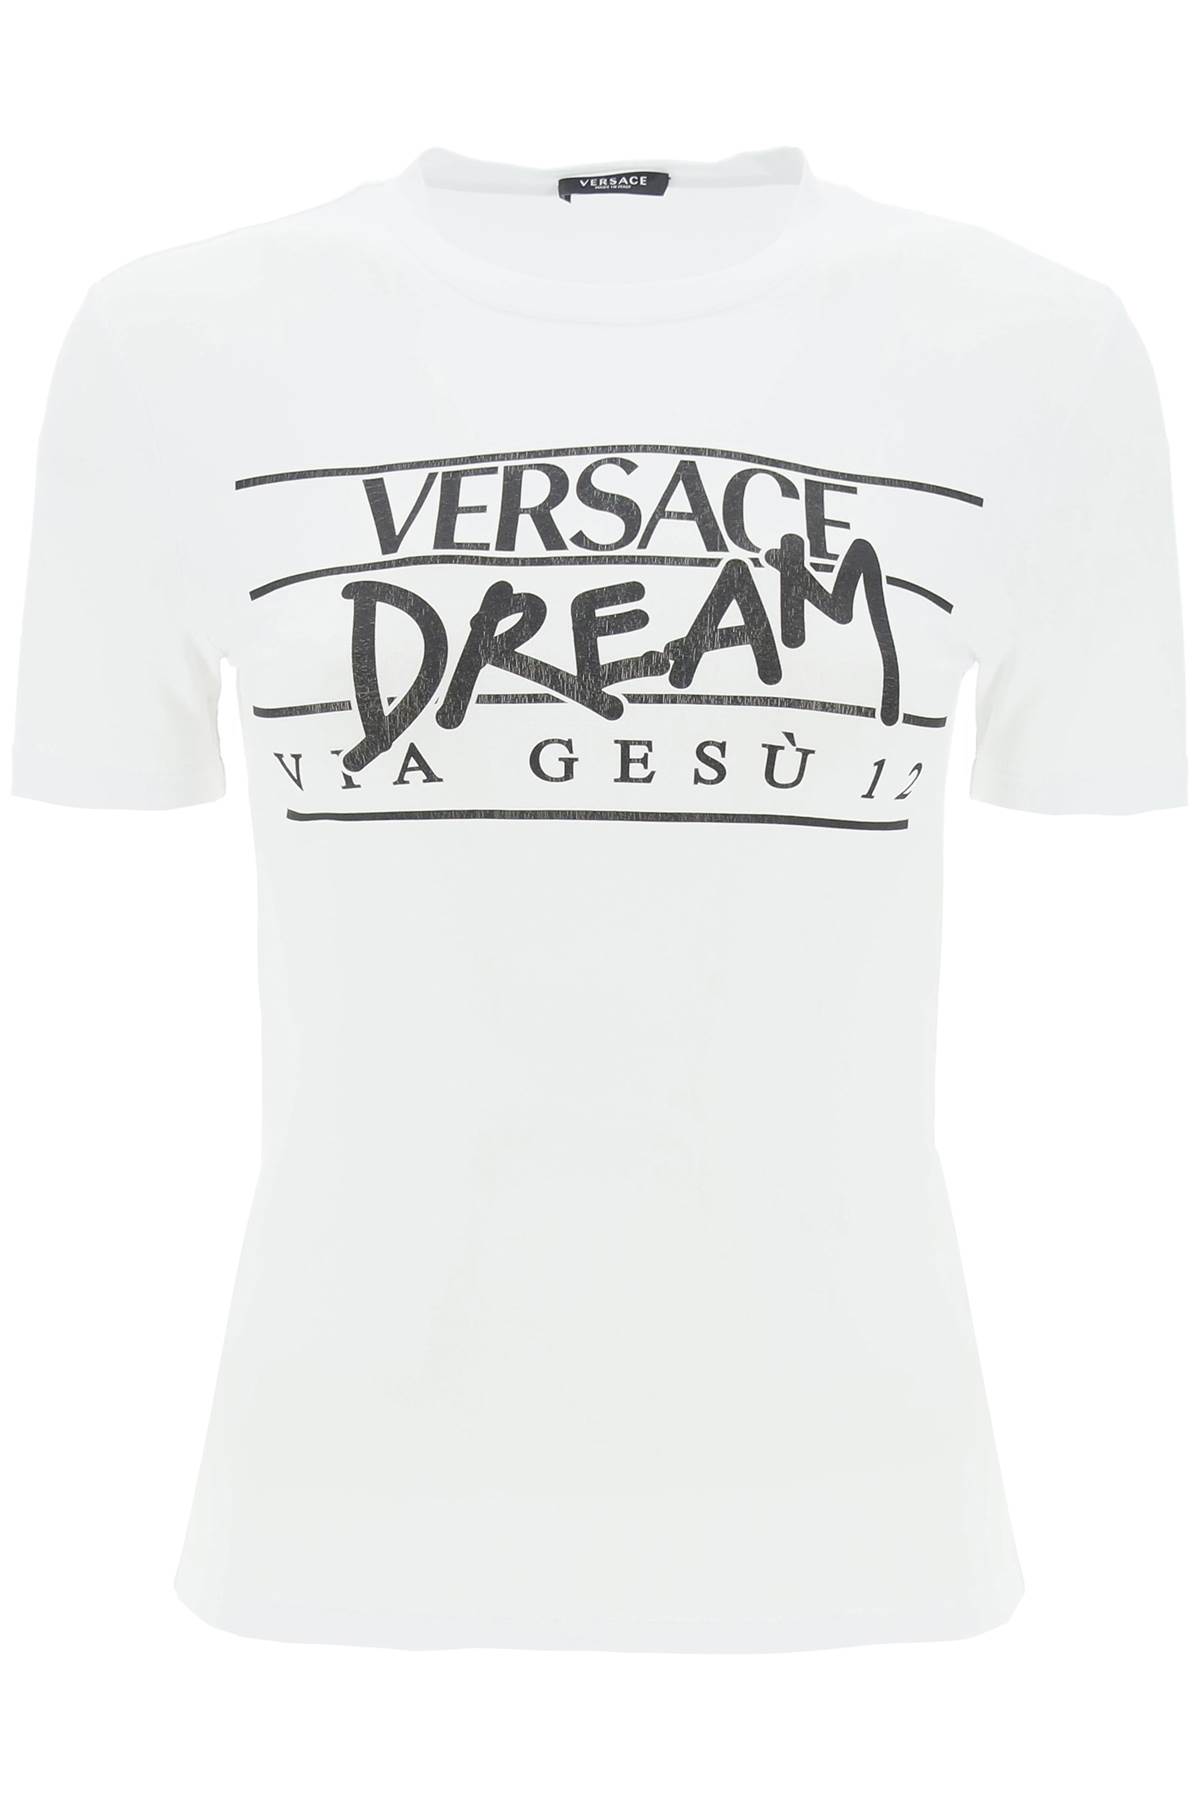 Versace Dream Logo Viscose T-shirt